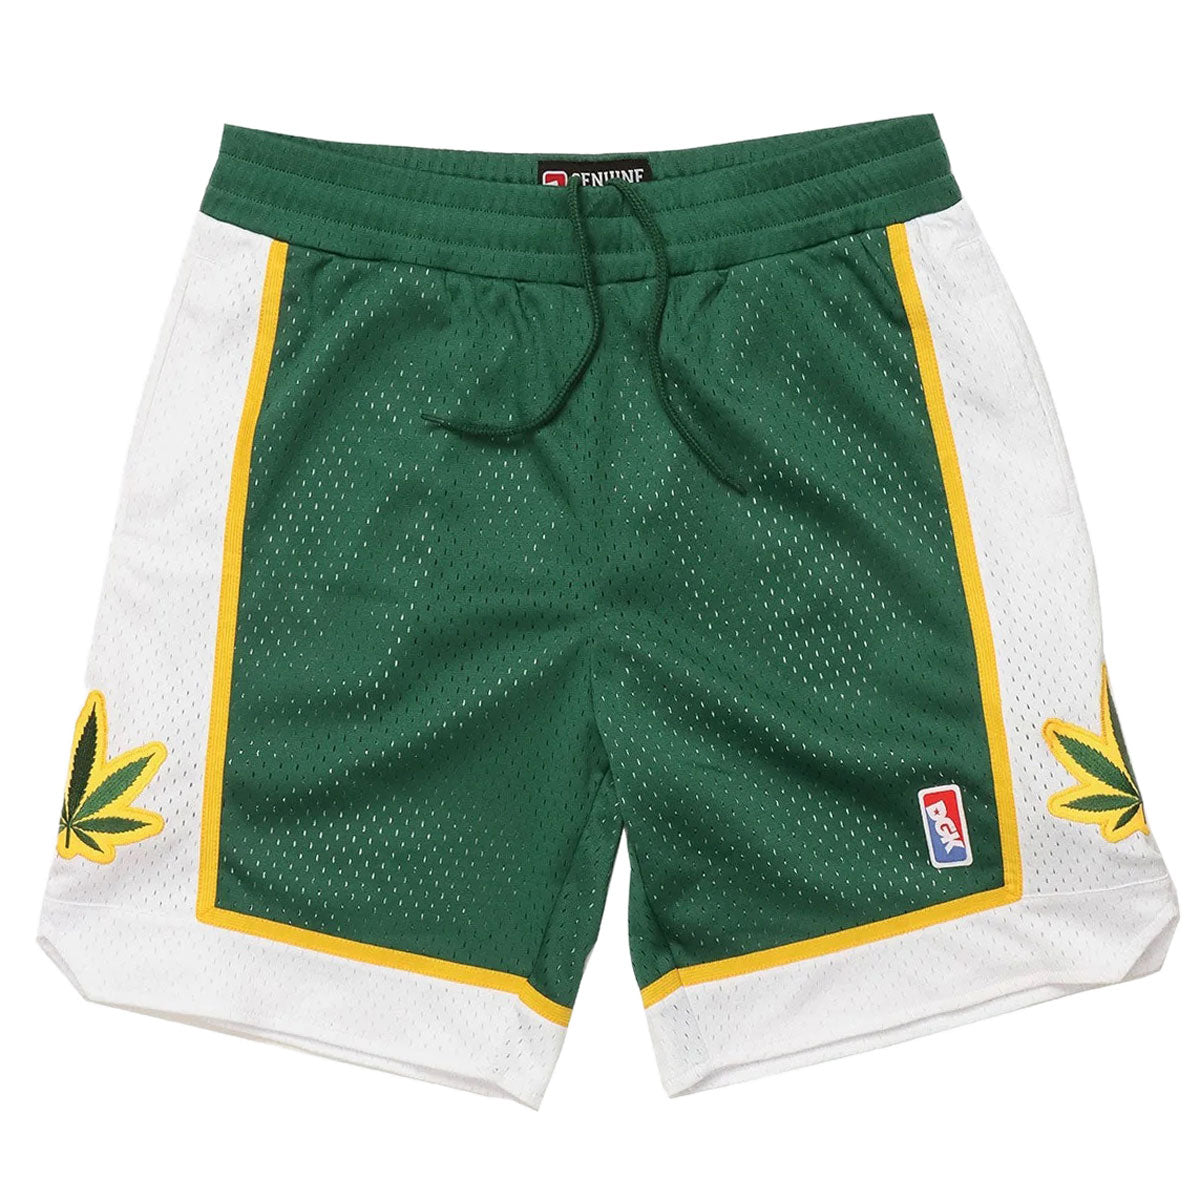 DGK Team Indica Basketball Shorts - Green image 1